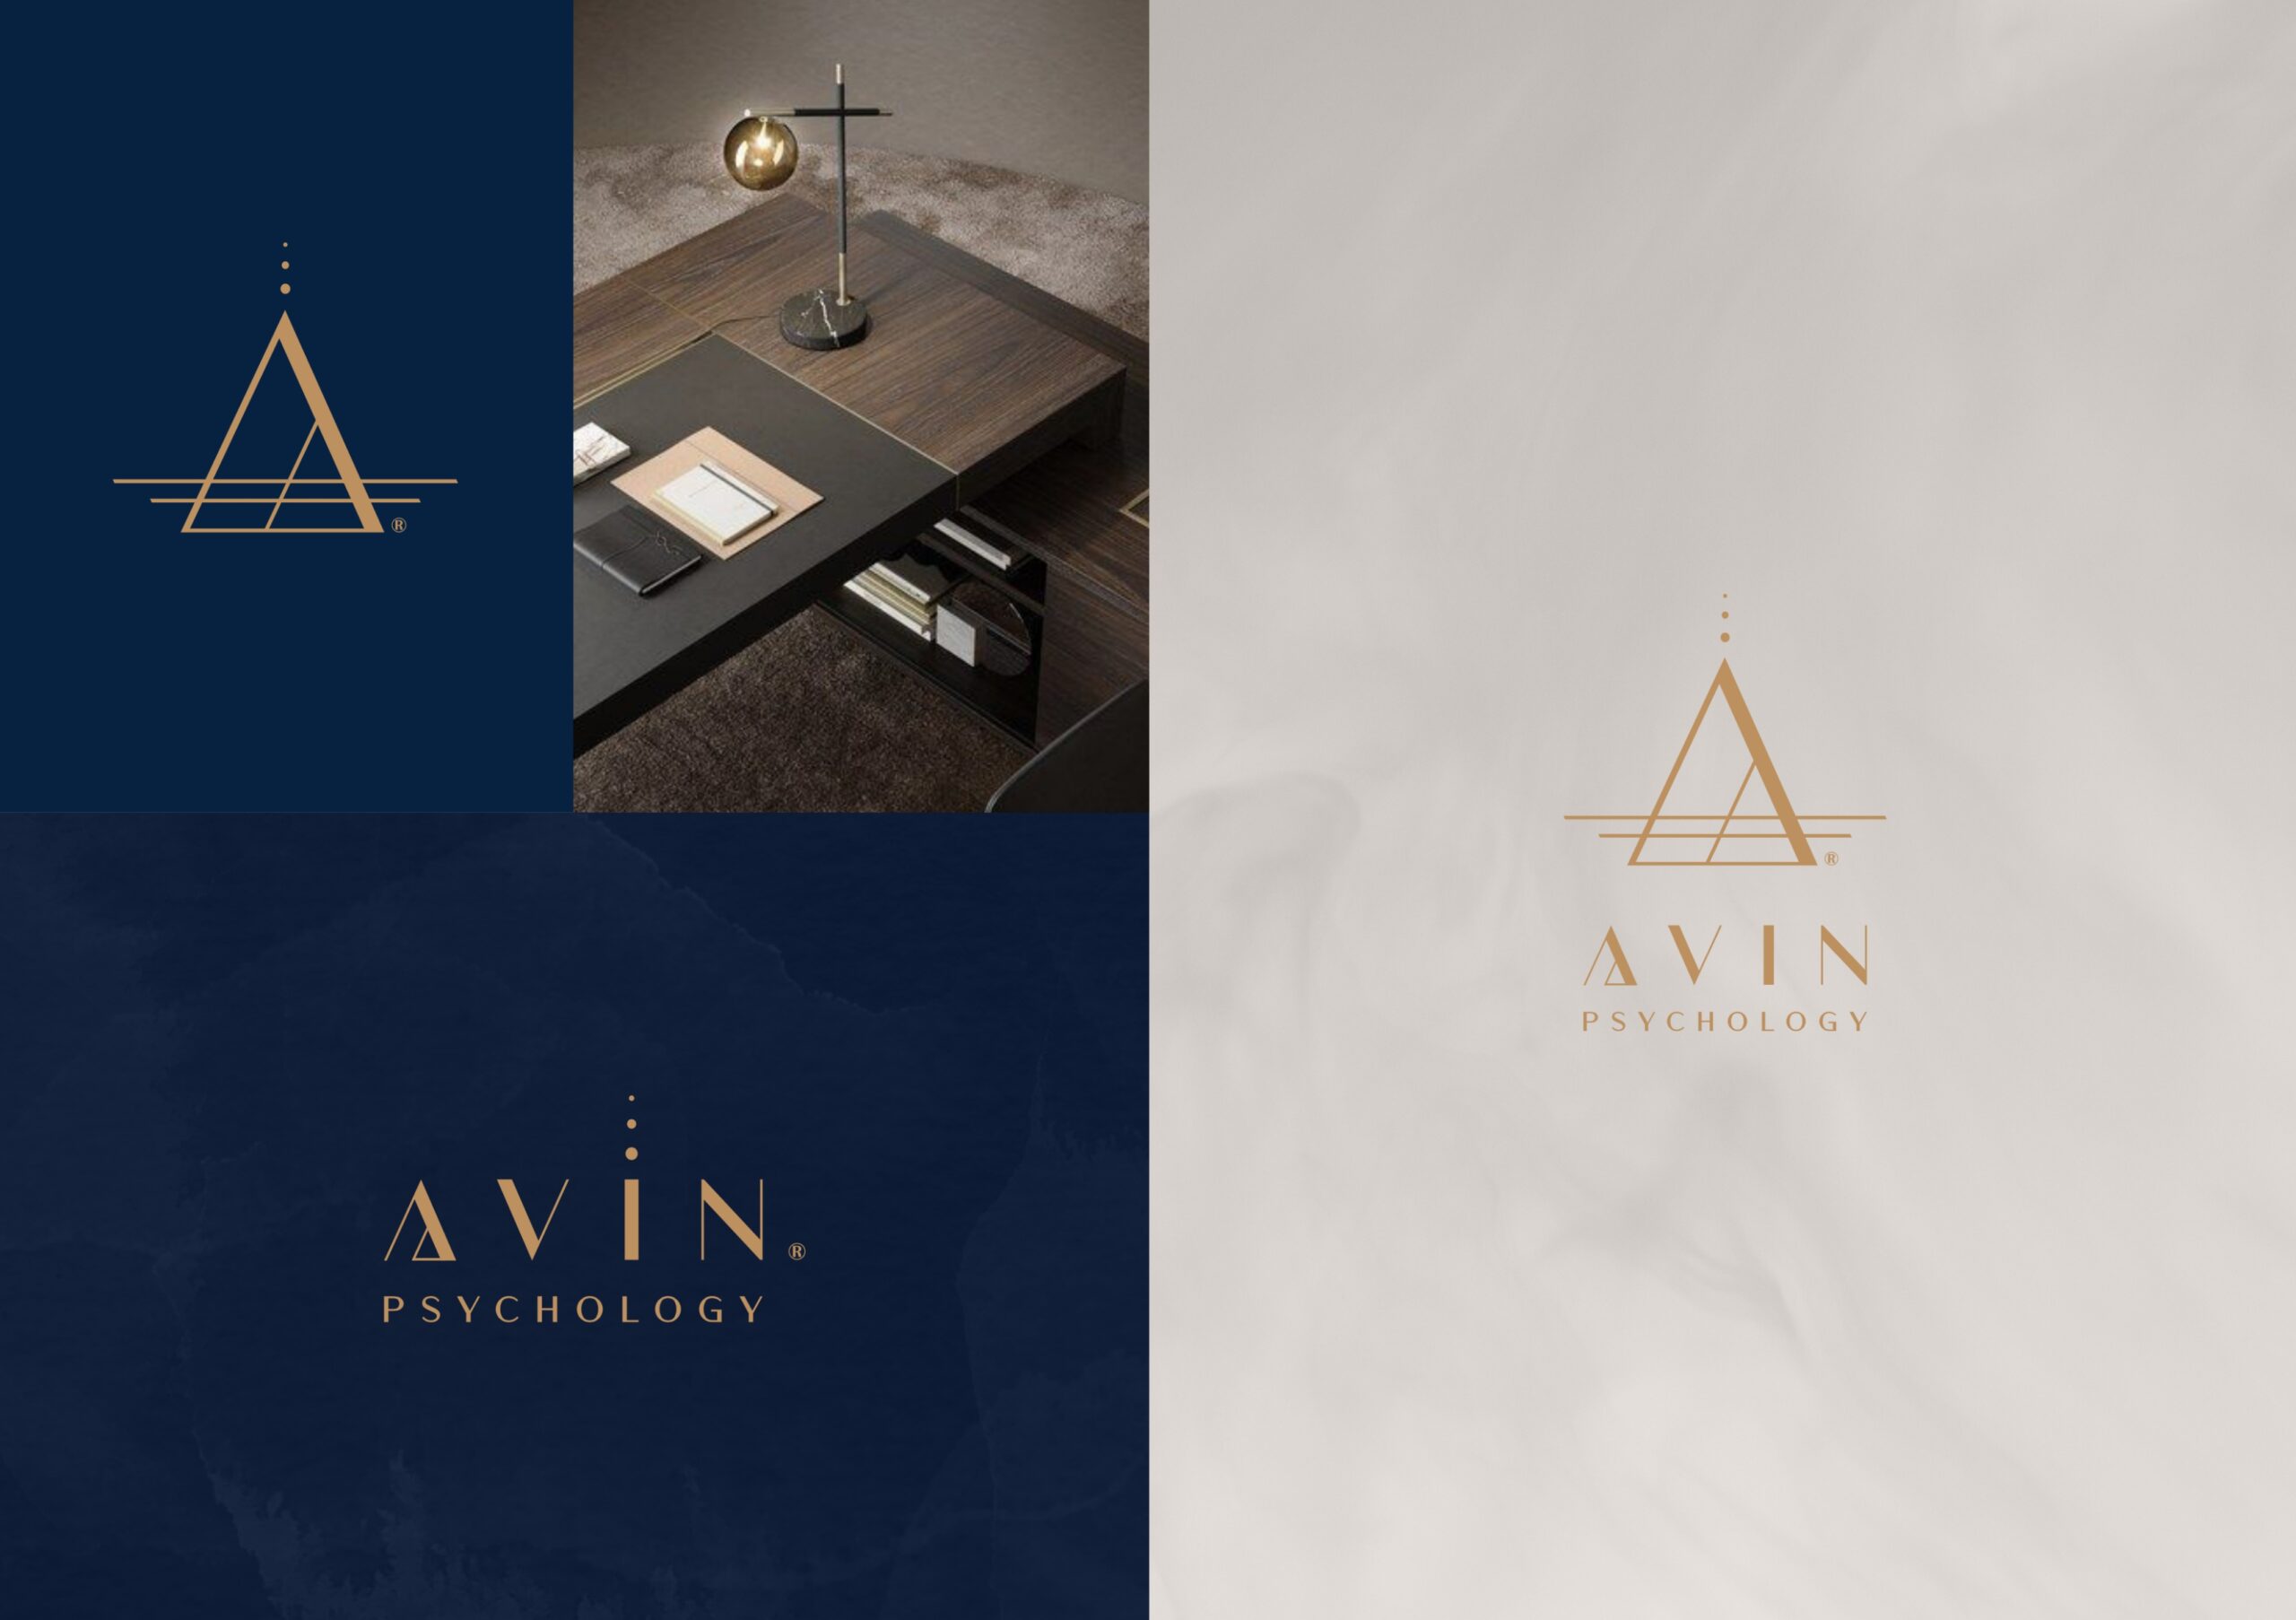 Avin Psychology Branding & Website Design Development by TL Design Co.